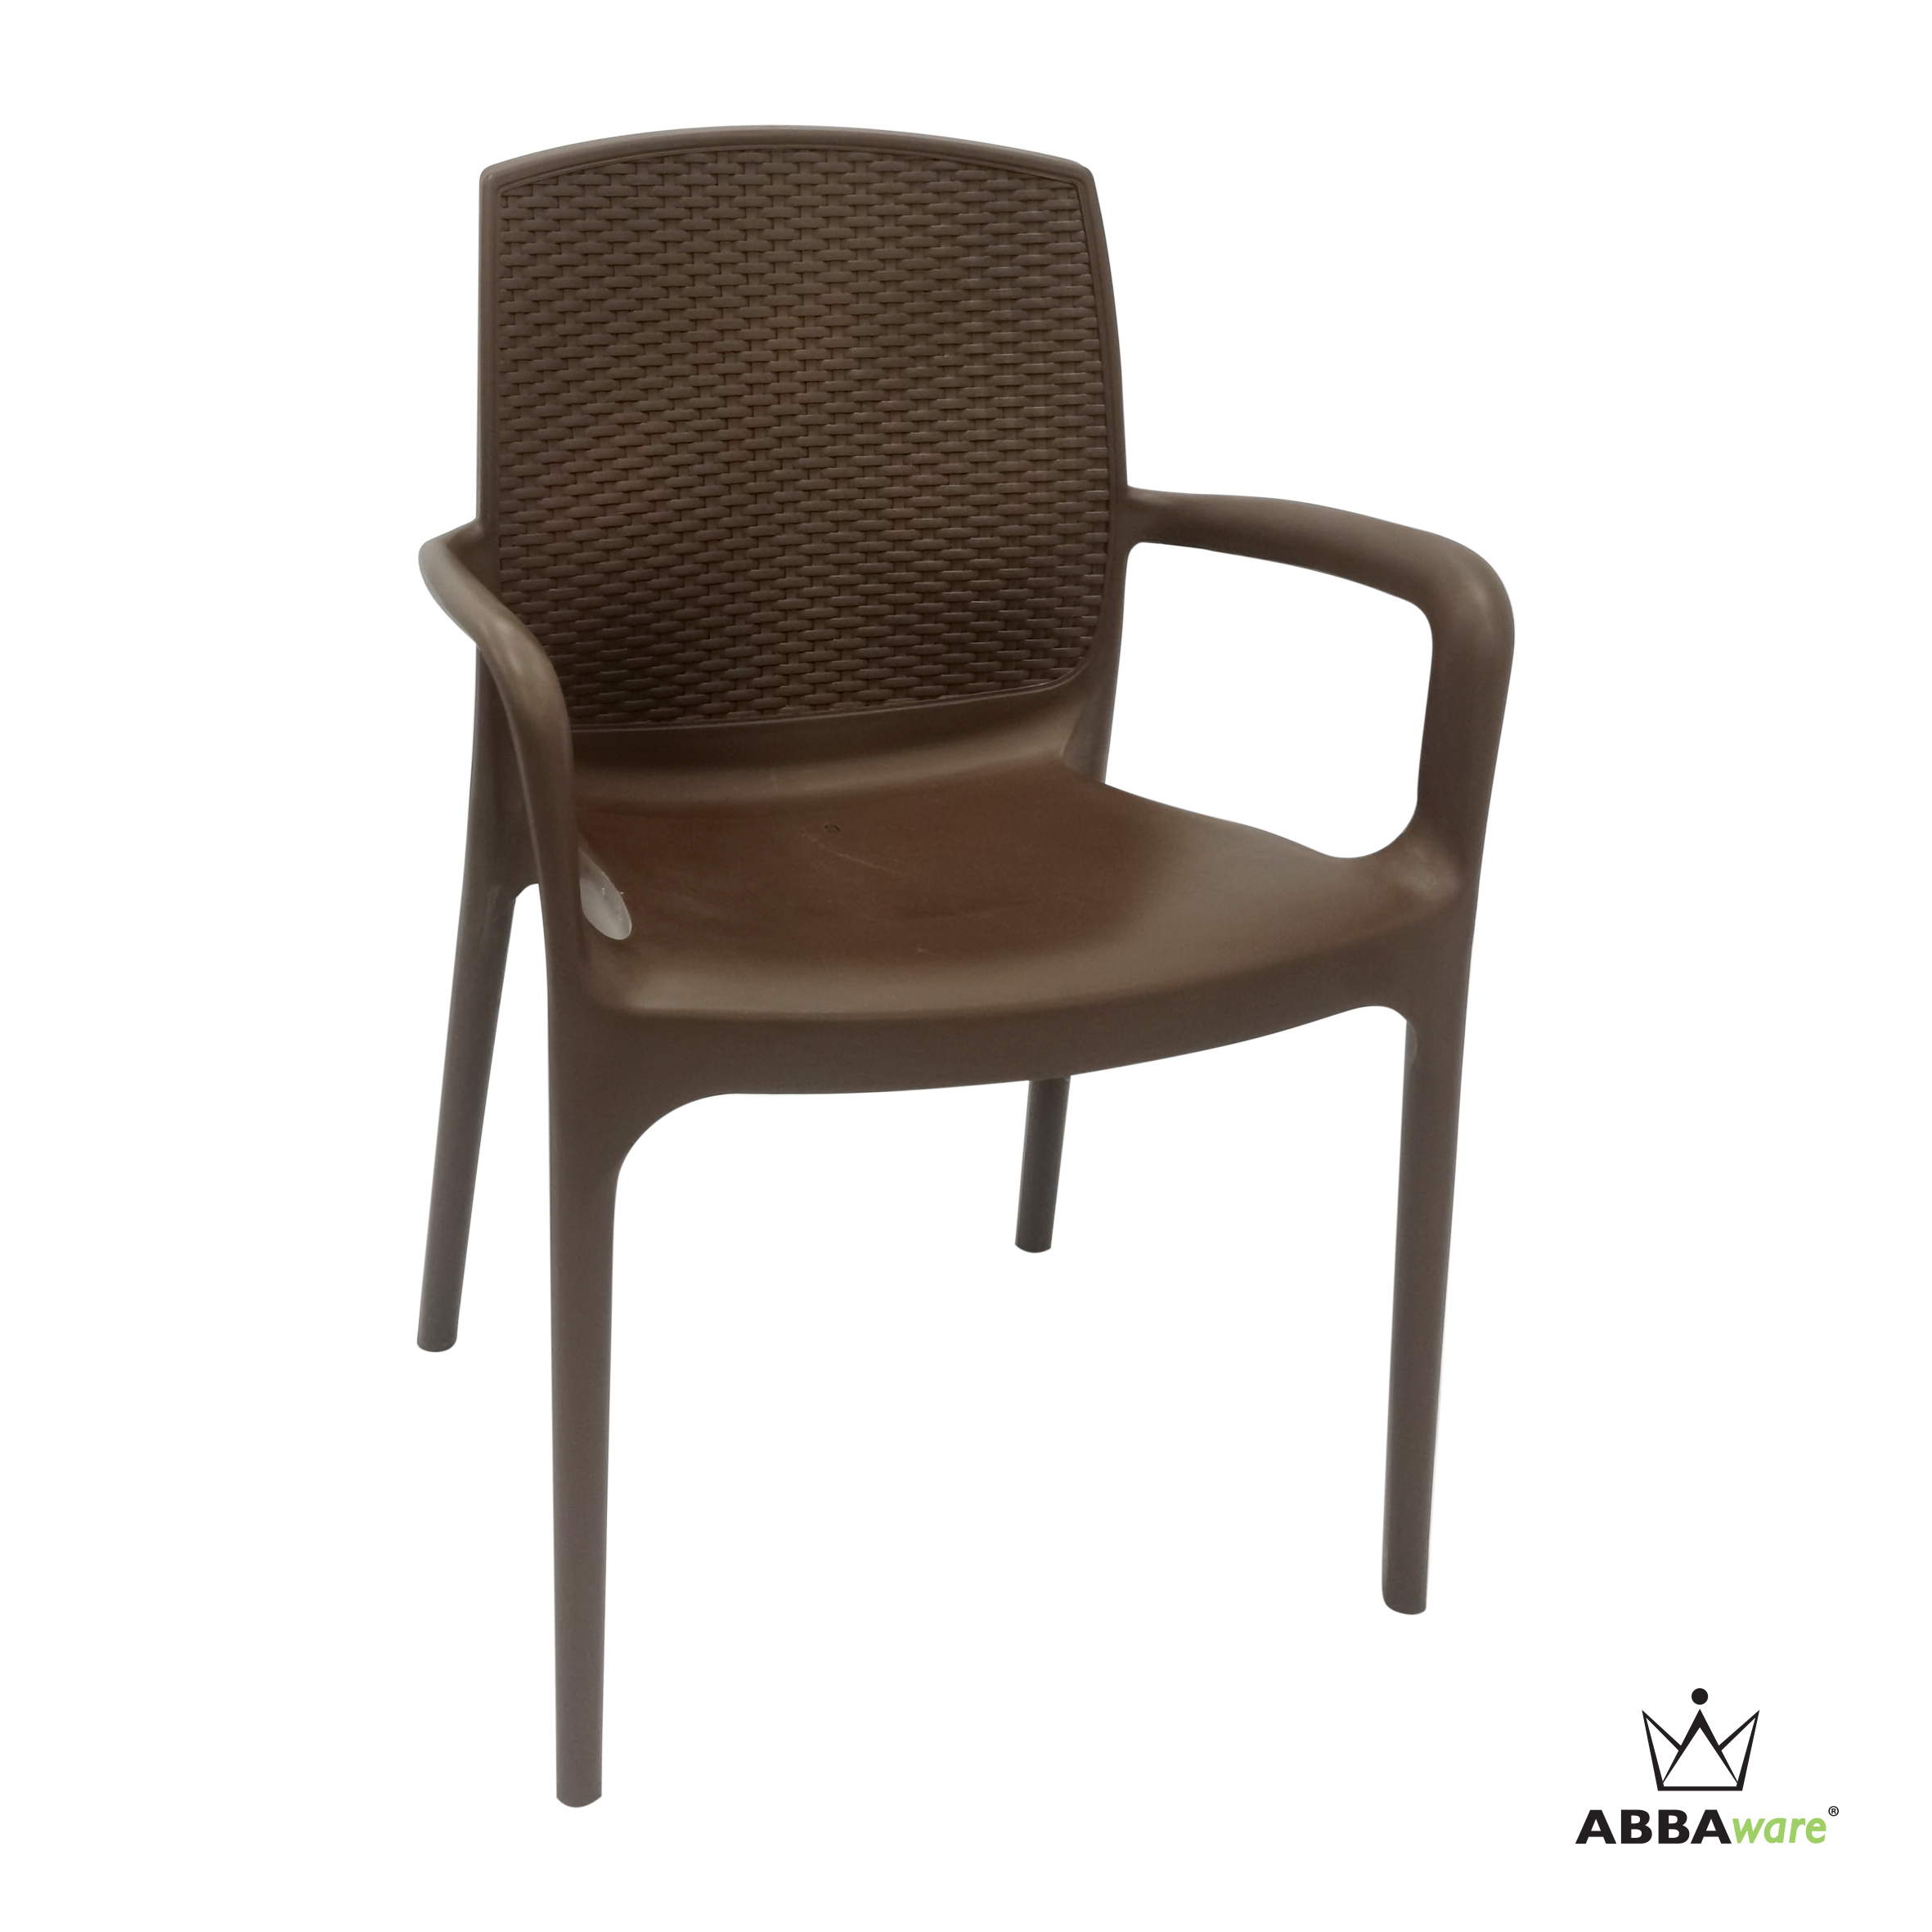 Abbaware Arm Chair/ Relax Chair/ Plastic Chair/ Kerusi Makan/ Kerusi Plastik/ Dining Chair